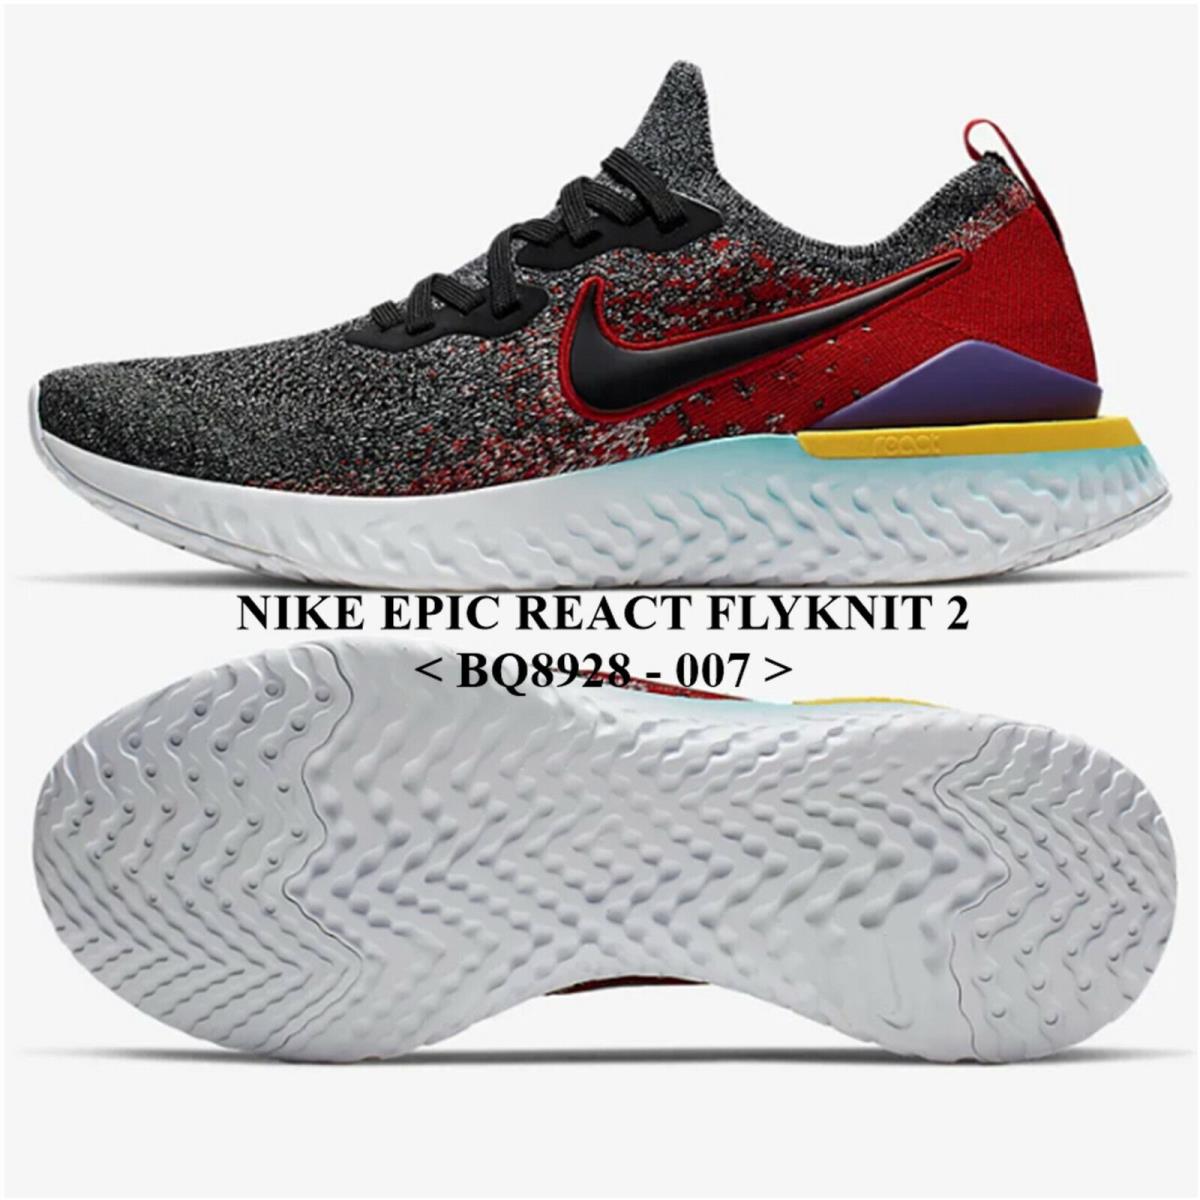 Nike Epic React Flyknit 2 BQ8928 - 007 Men`s Running/casual Shoes. NO Lid - Black/Hyper Jade